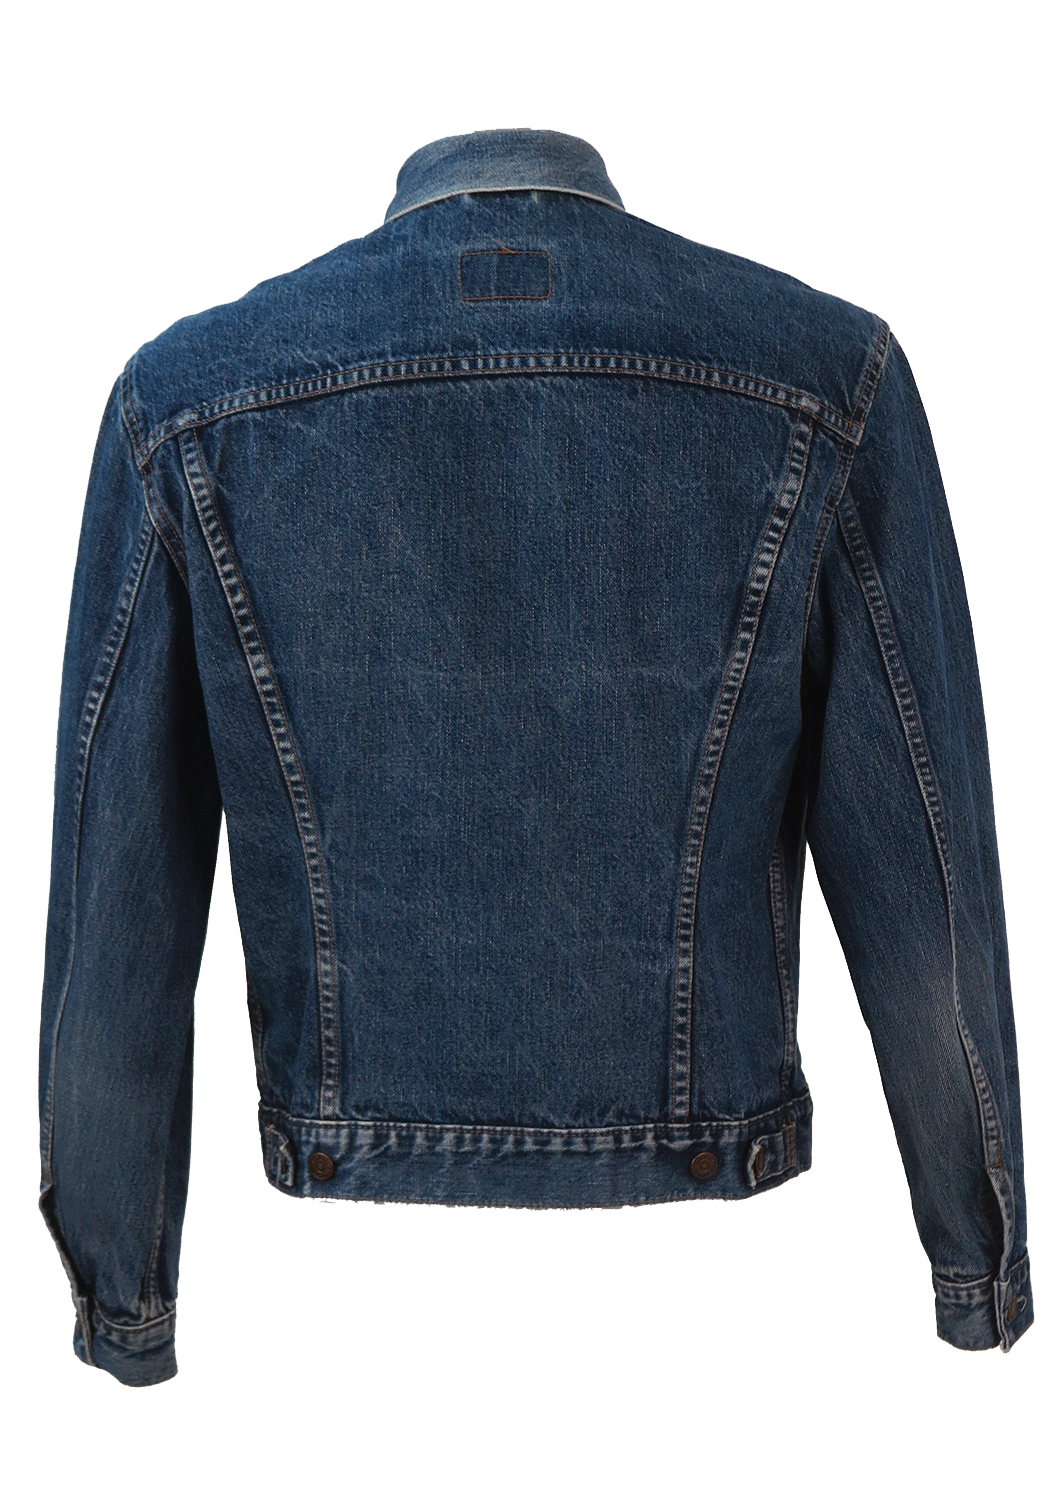 Levis Dark Blue Denim Jacket - M/L | Reign Vintage